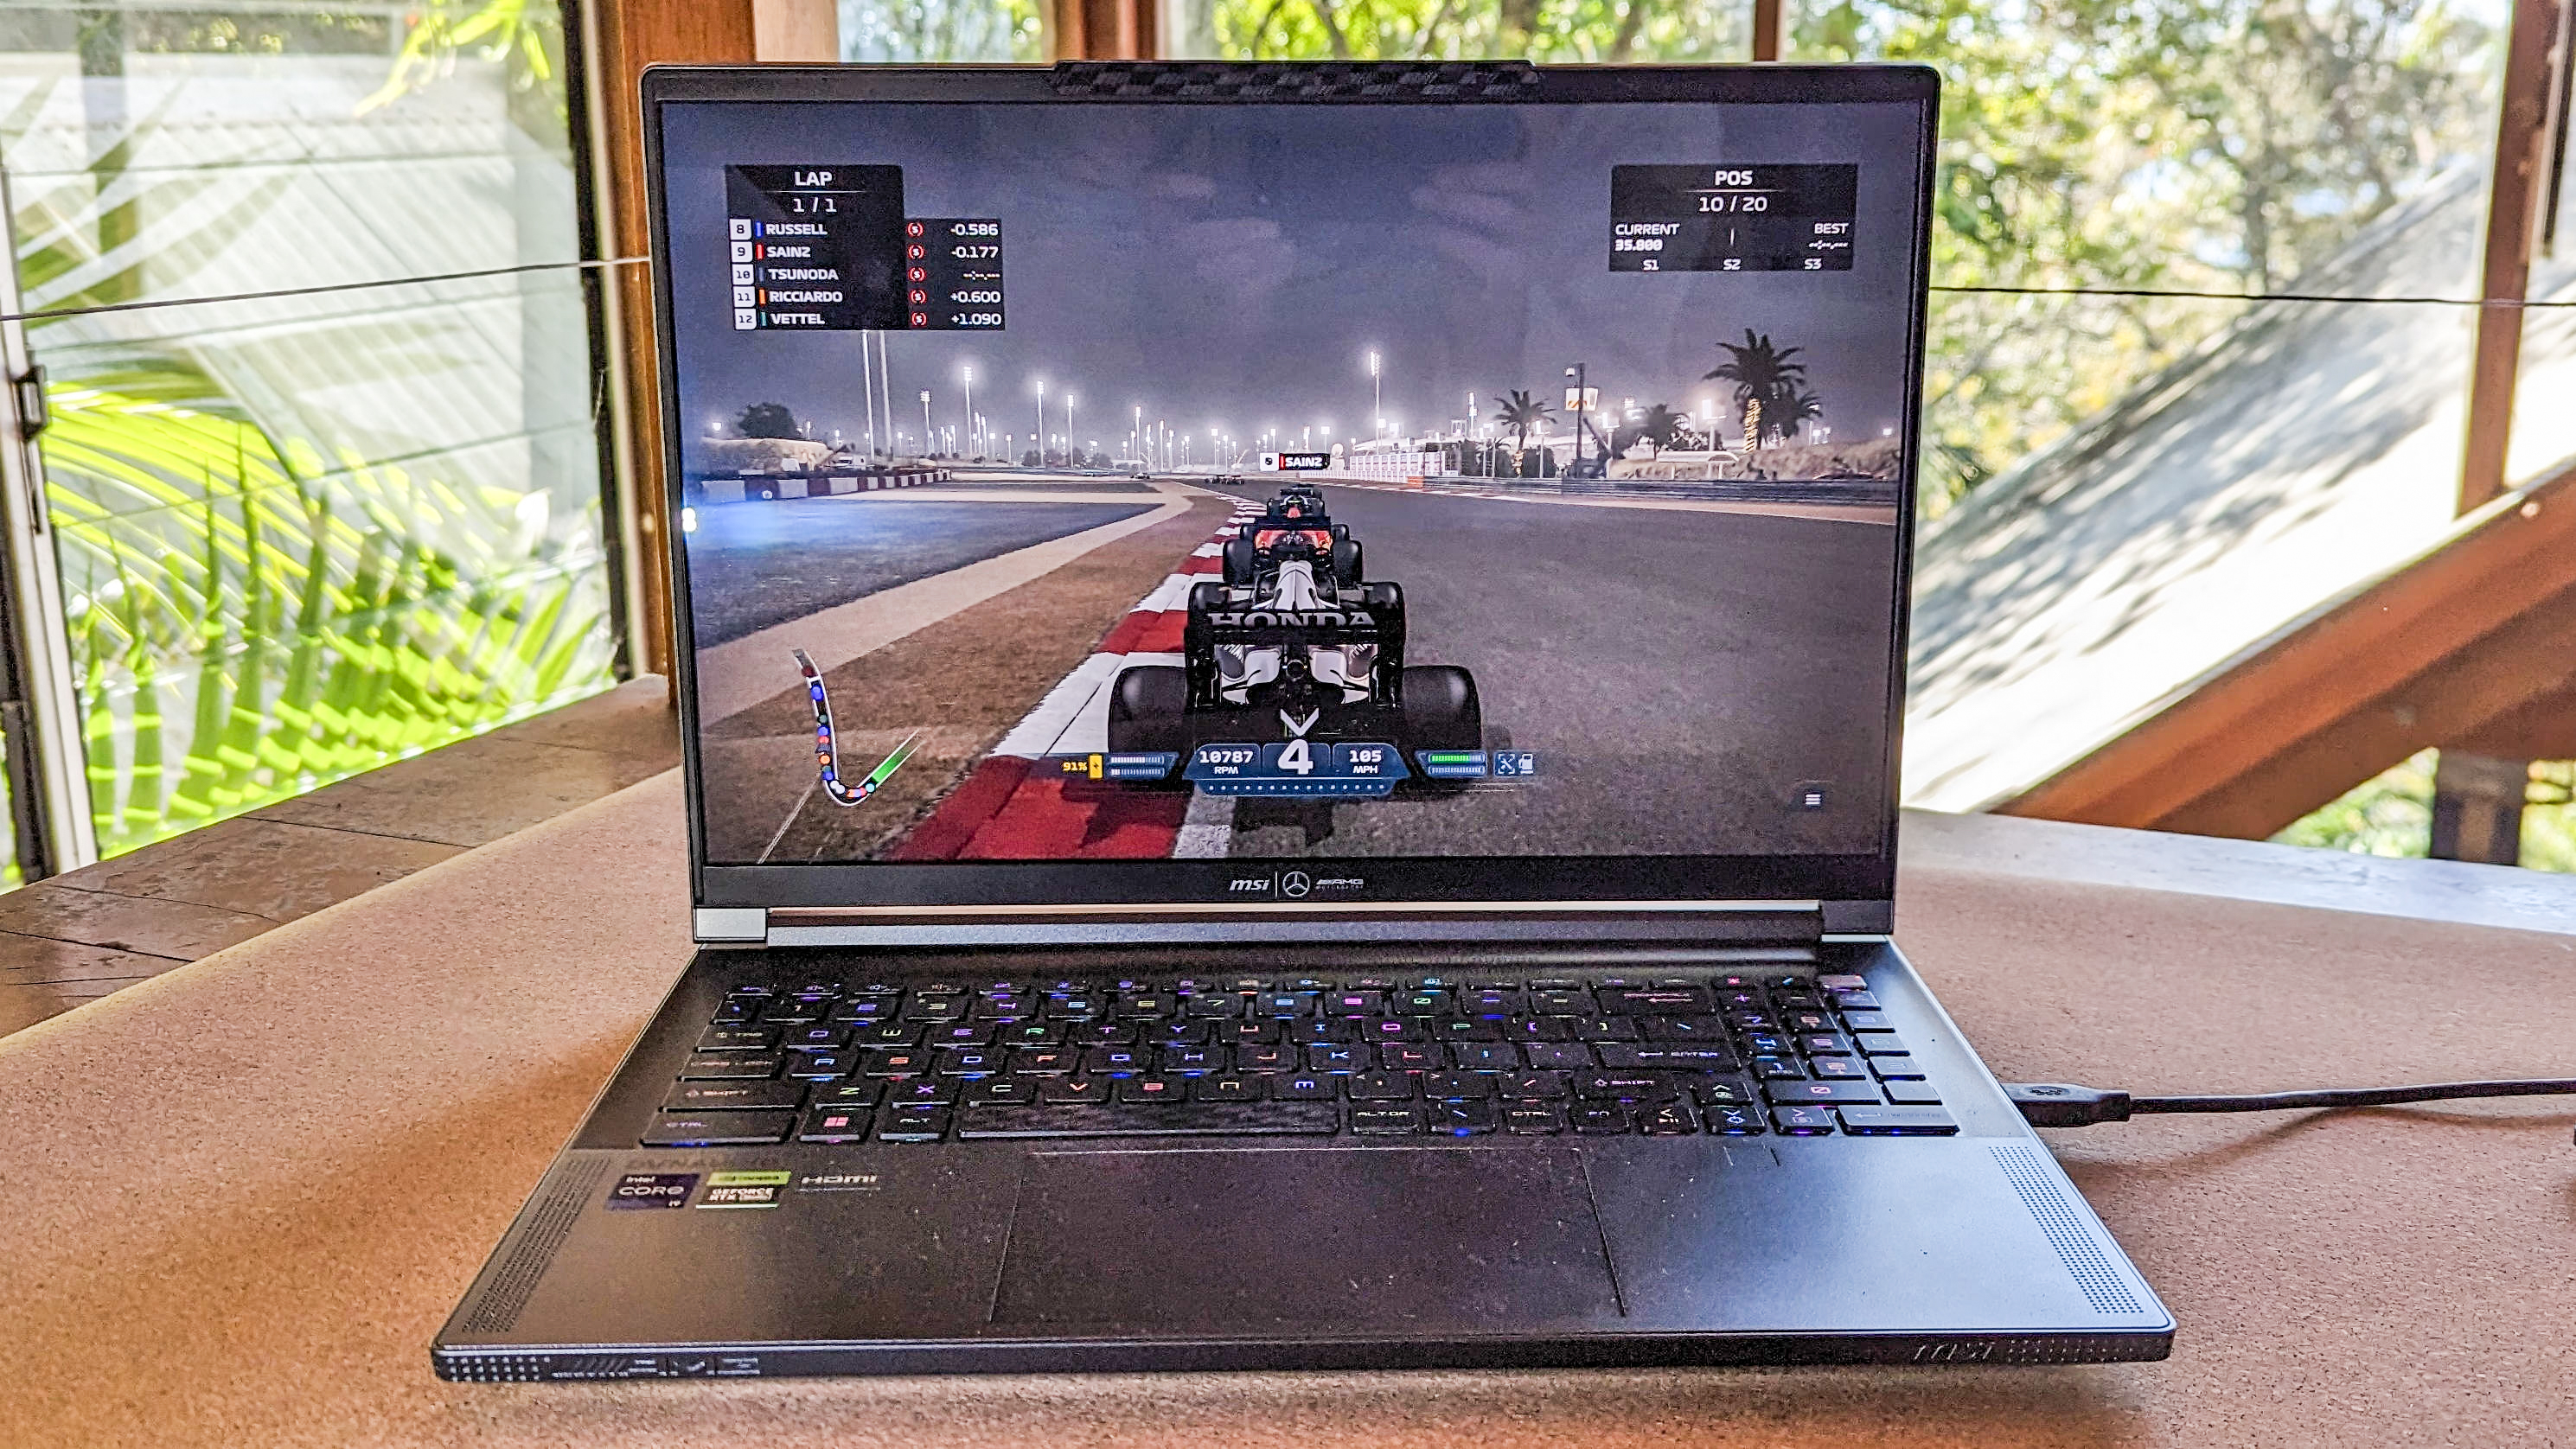 MSI laptop on yoga mat